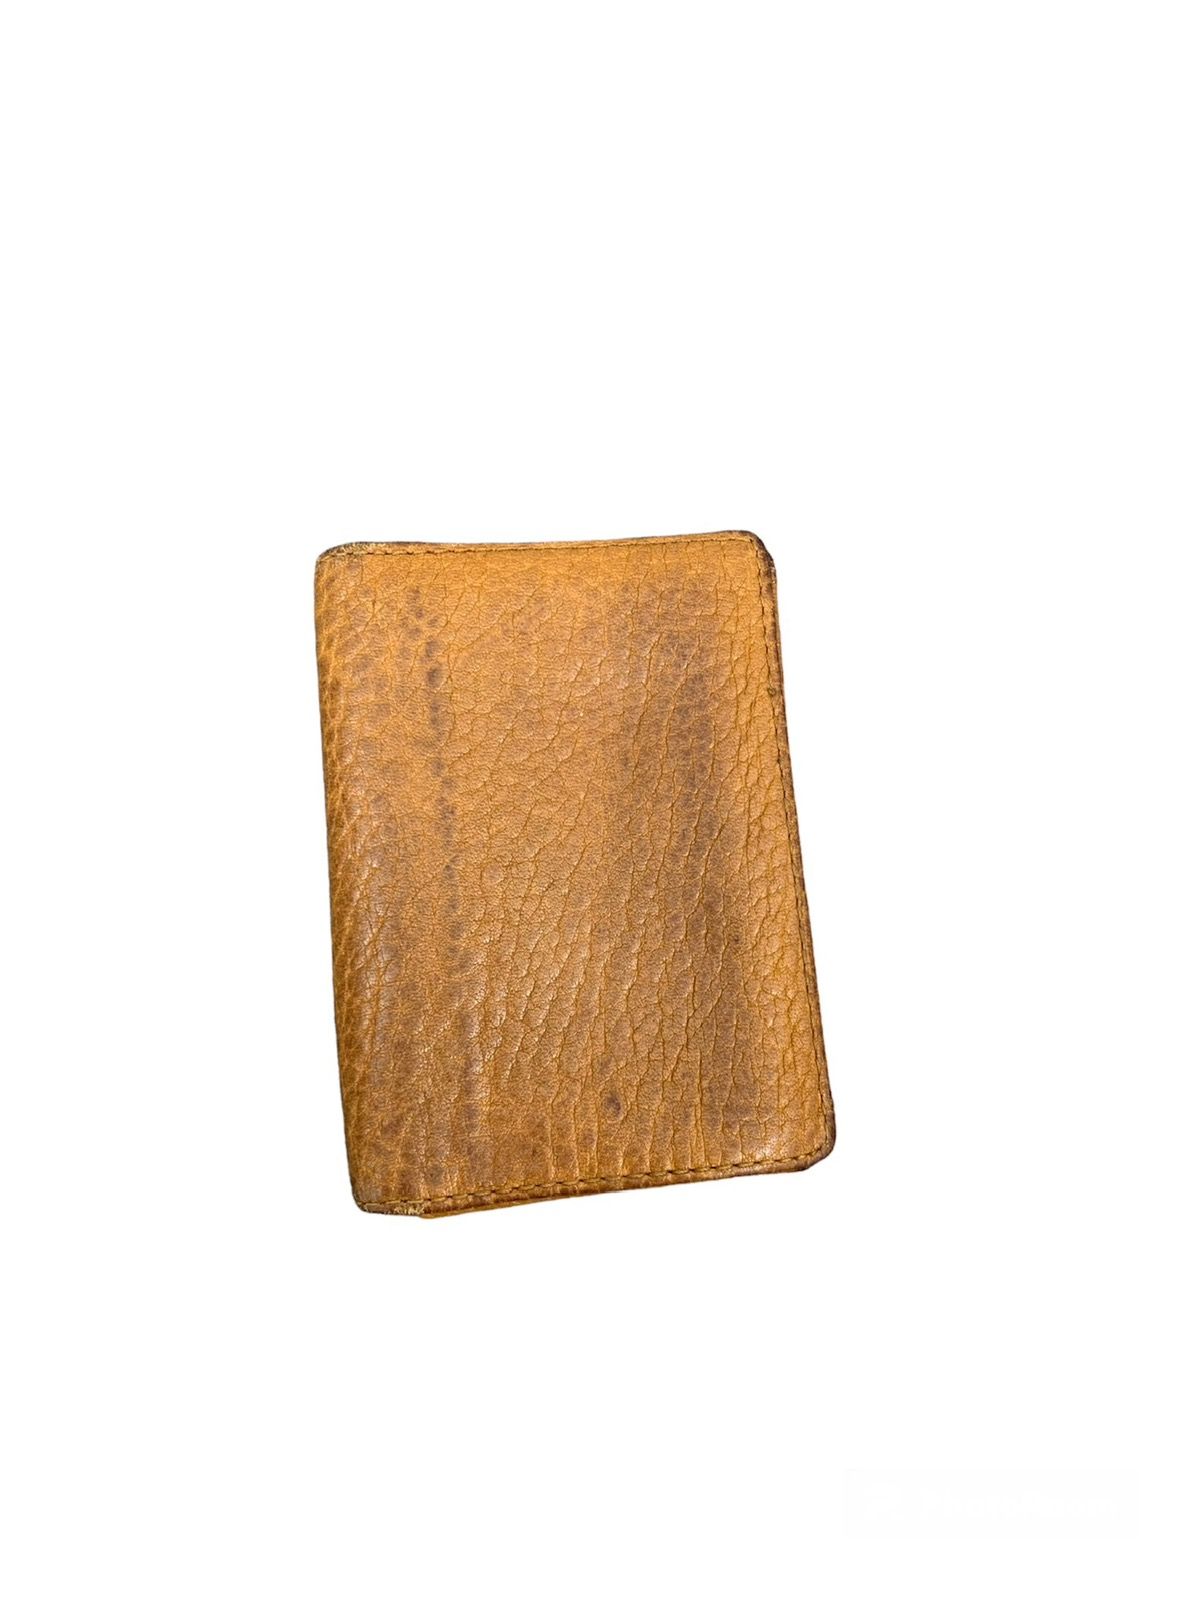 Vintage Polo Ralph Lauren Leather Card holder Wallet - 1